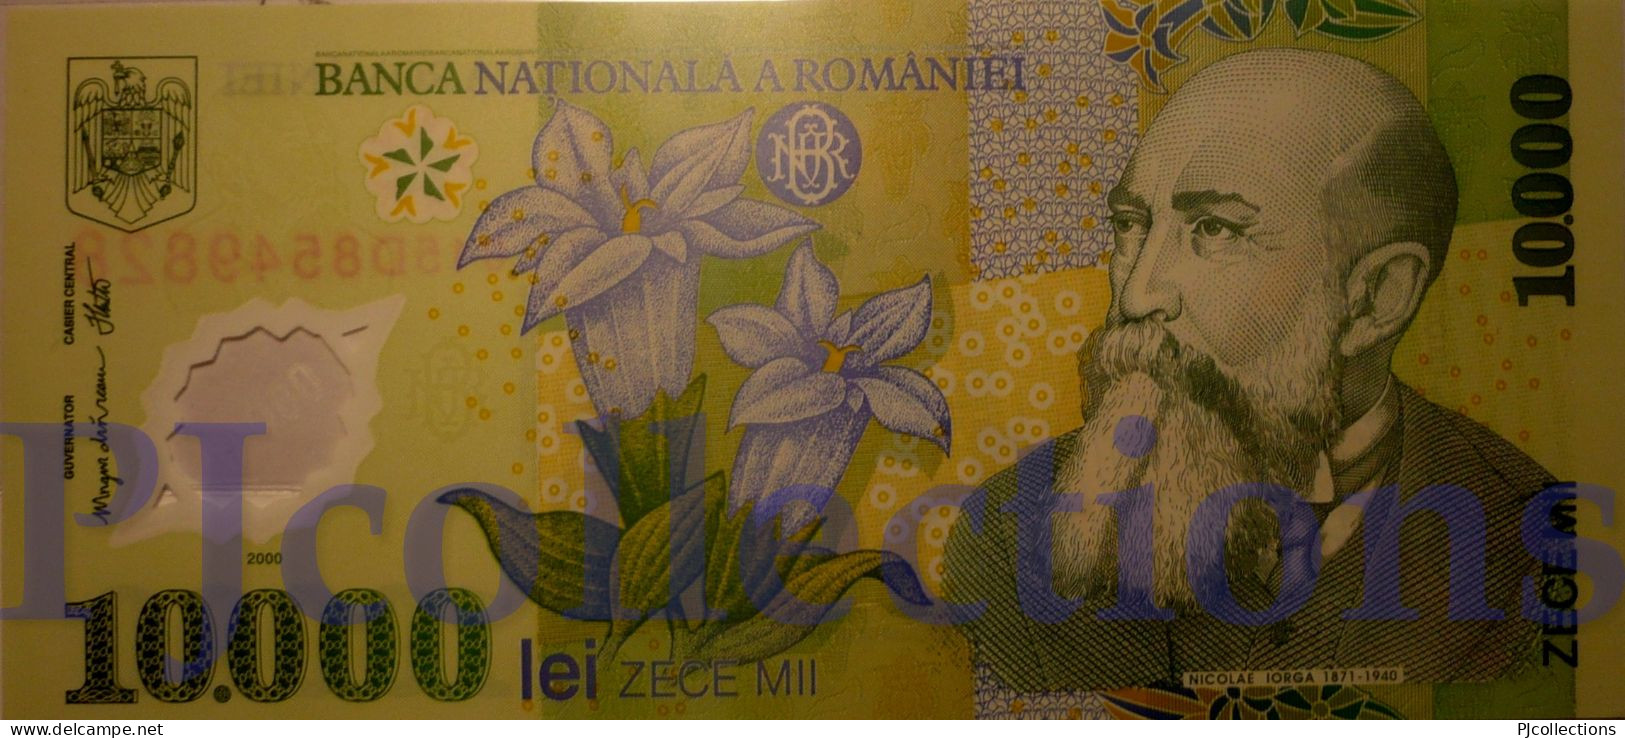 ROMANIA 10000 LEI 2000 PICK 112b POLYMER UNC - Rumania